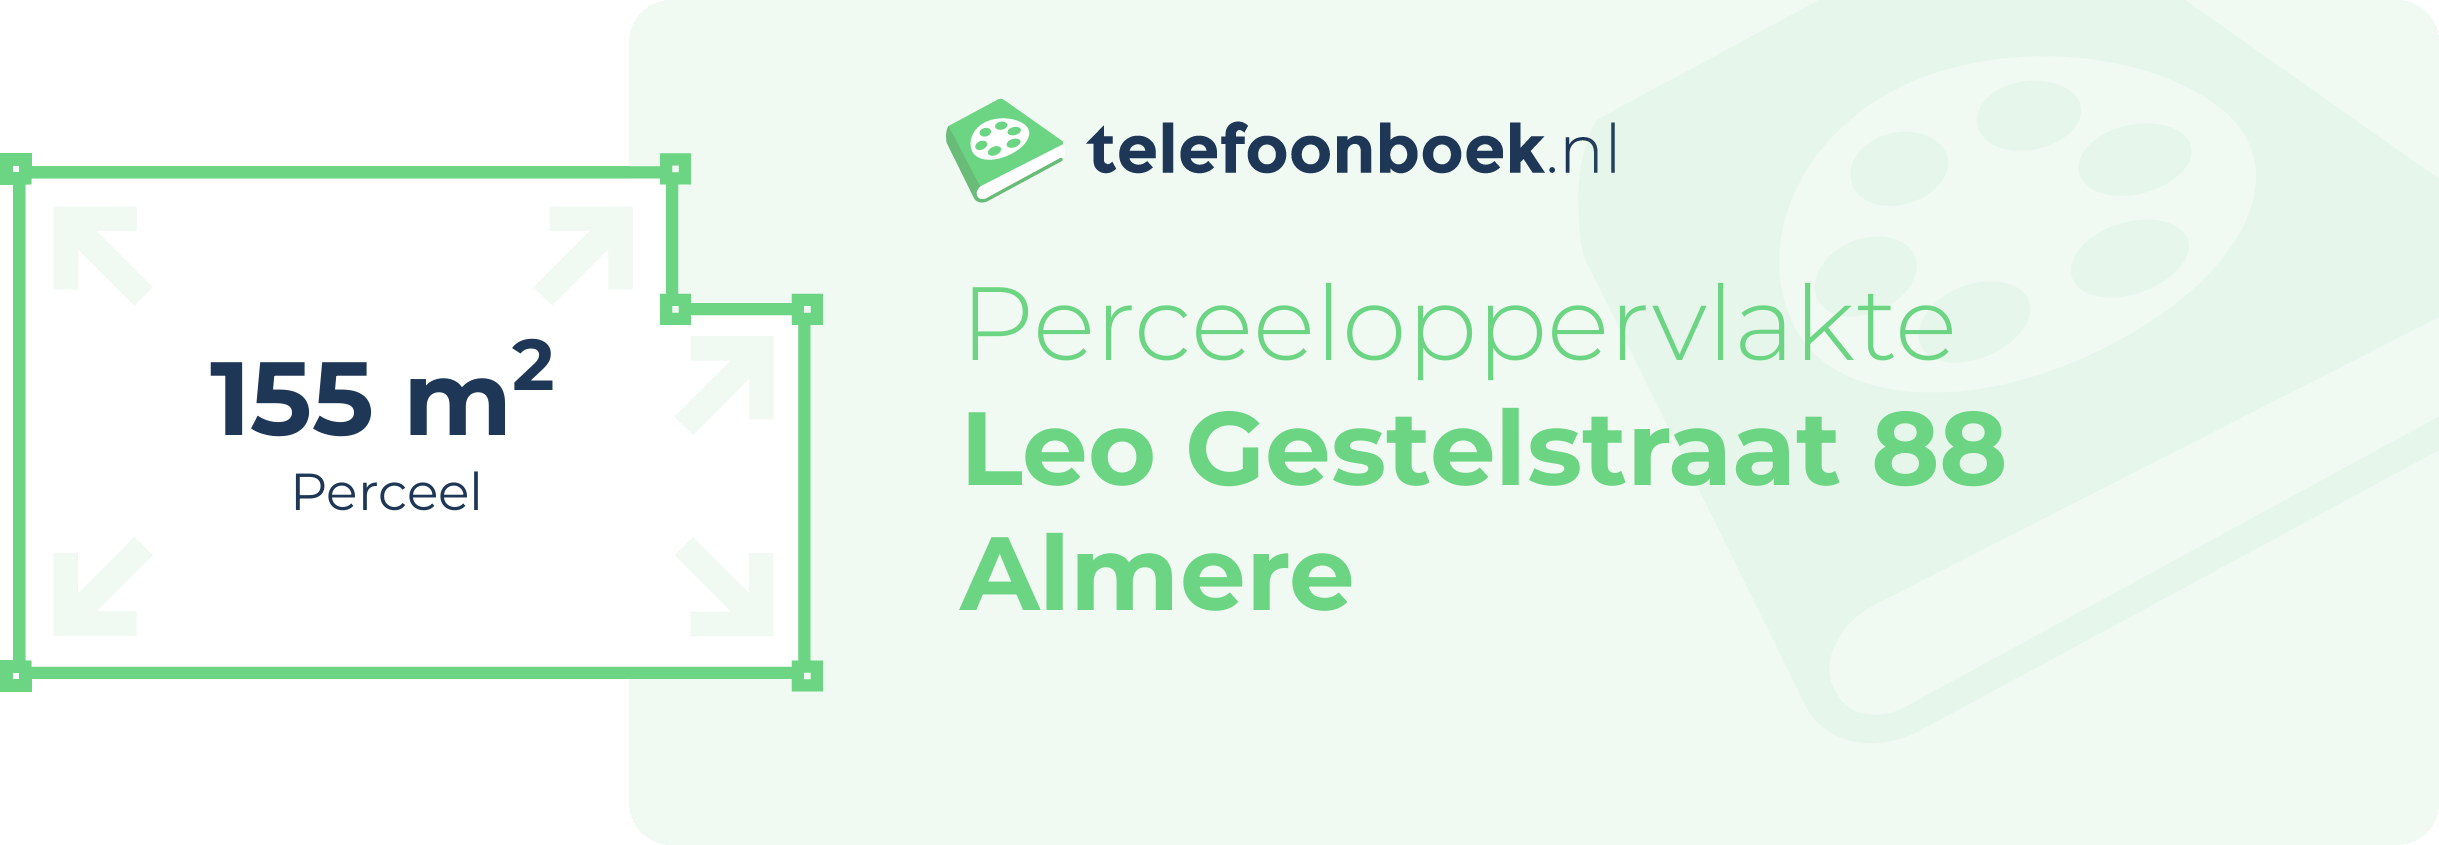 Perceeloppervlakte Leo Gestelstraat 88 Almere